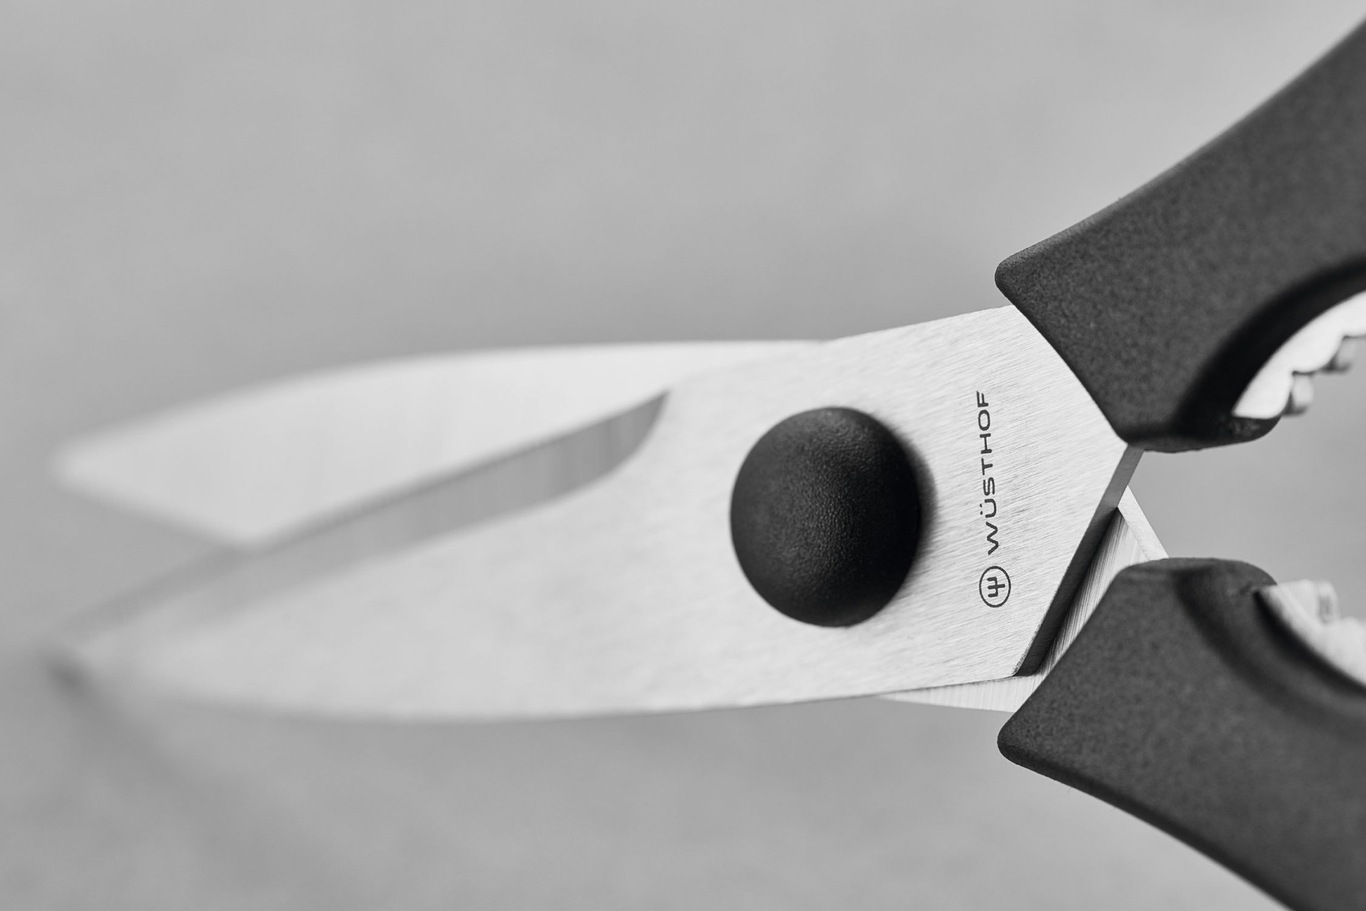 Functional Form Hardware Scissor 25cm, Black